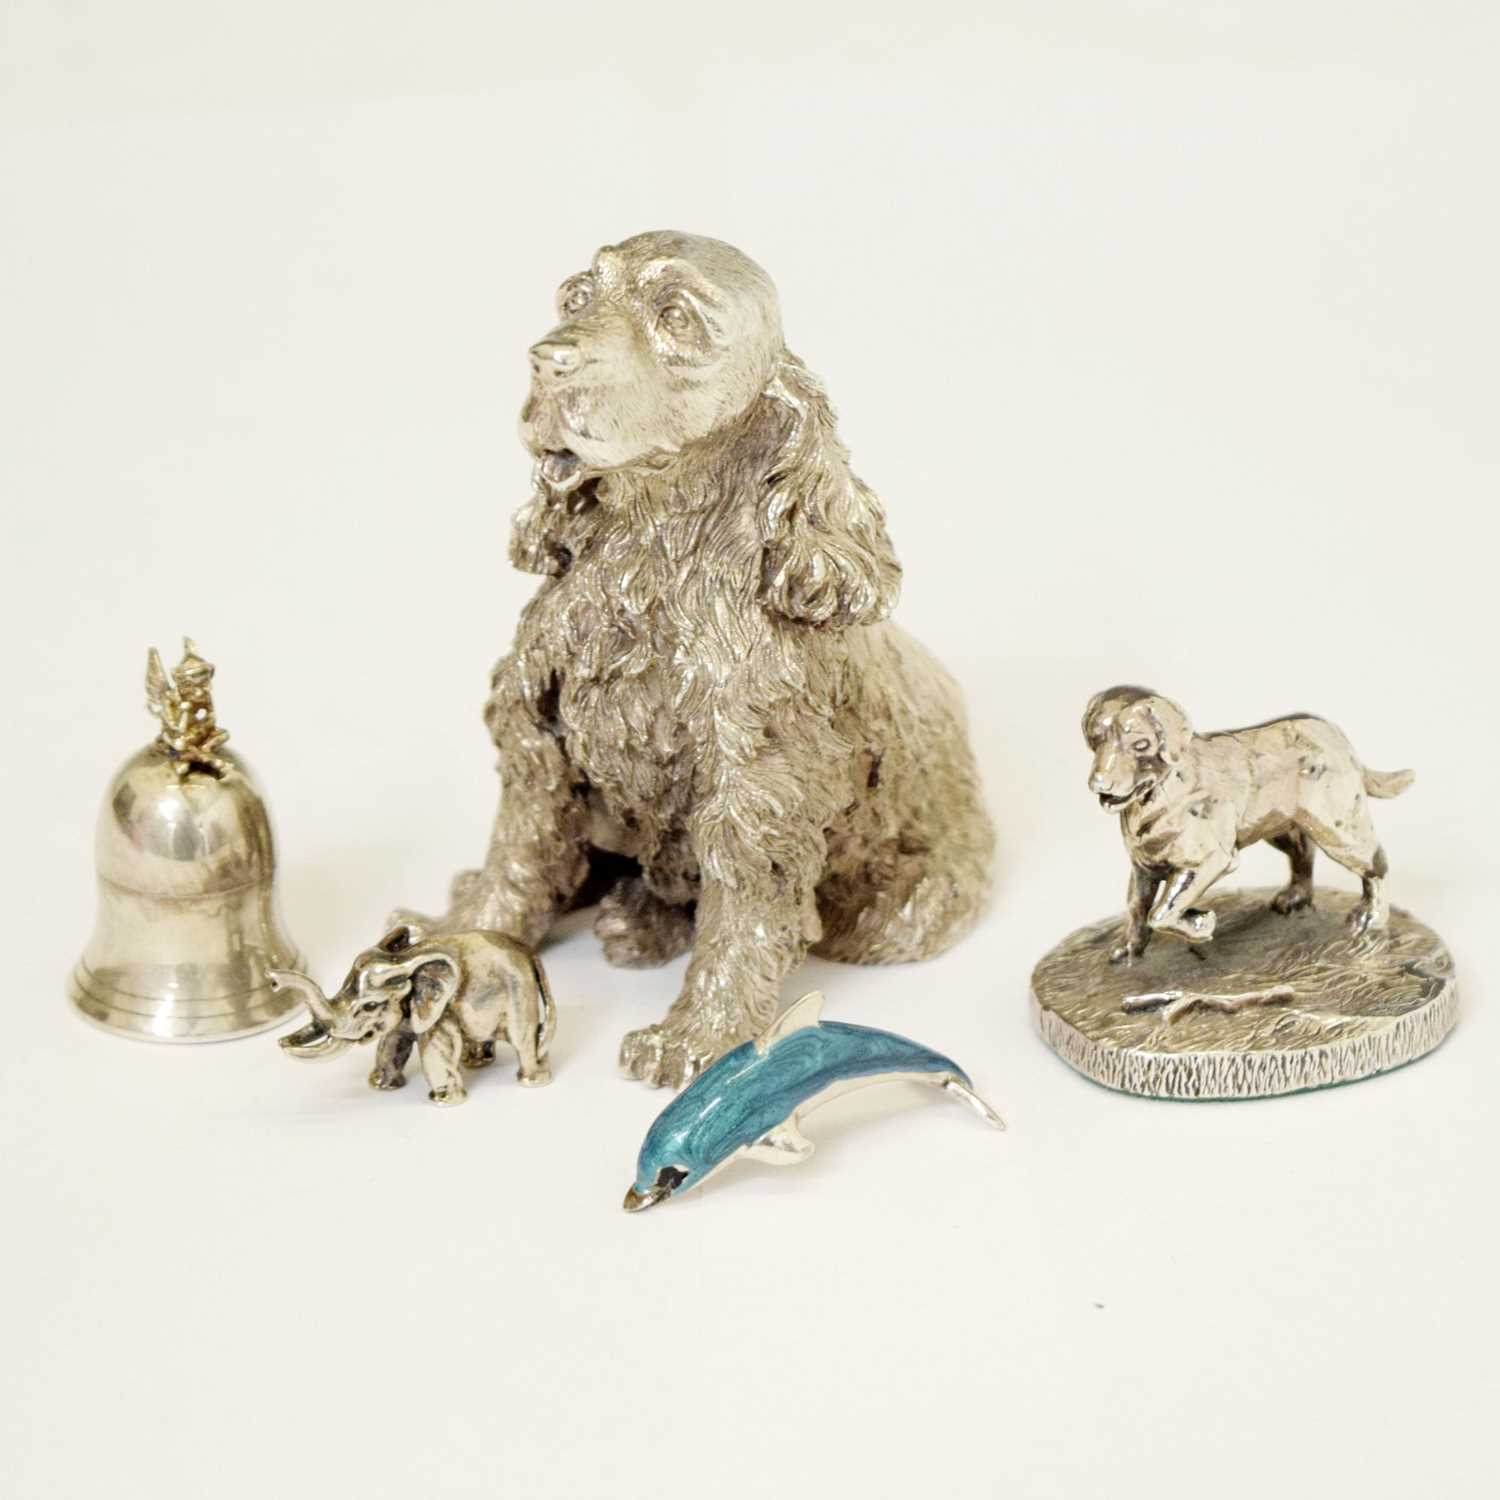 Silver and enamel figure of a dolphin, two Elizabeth II dog figures, etc